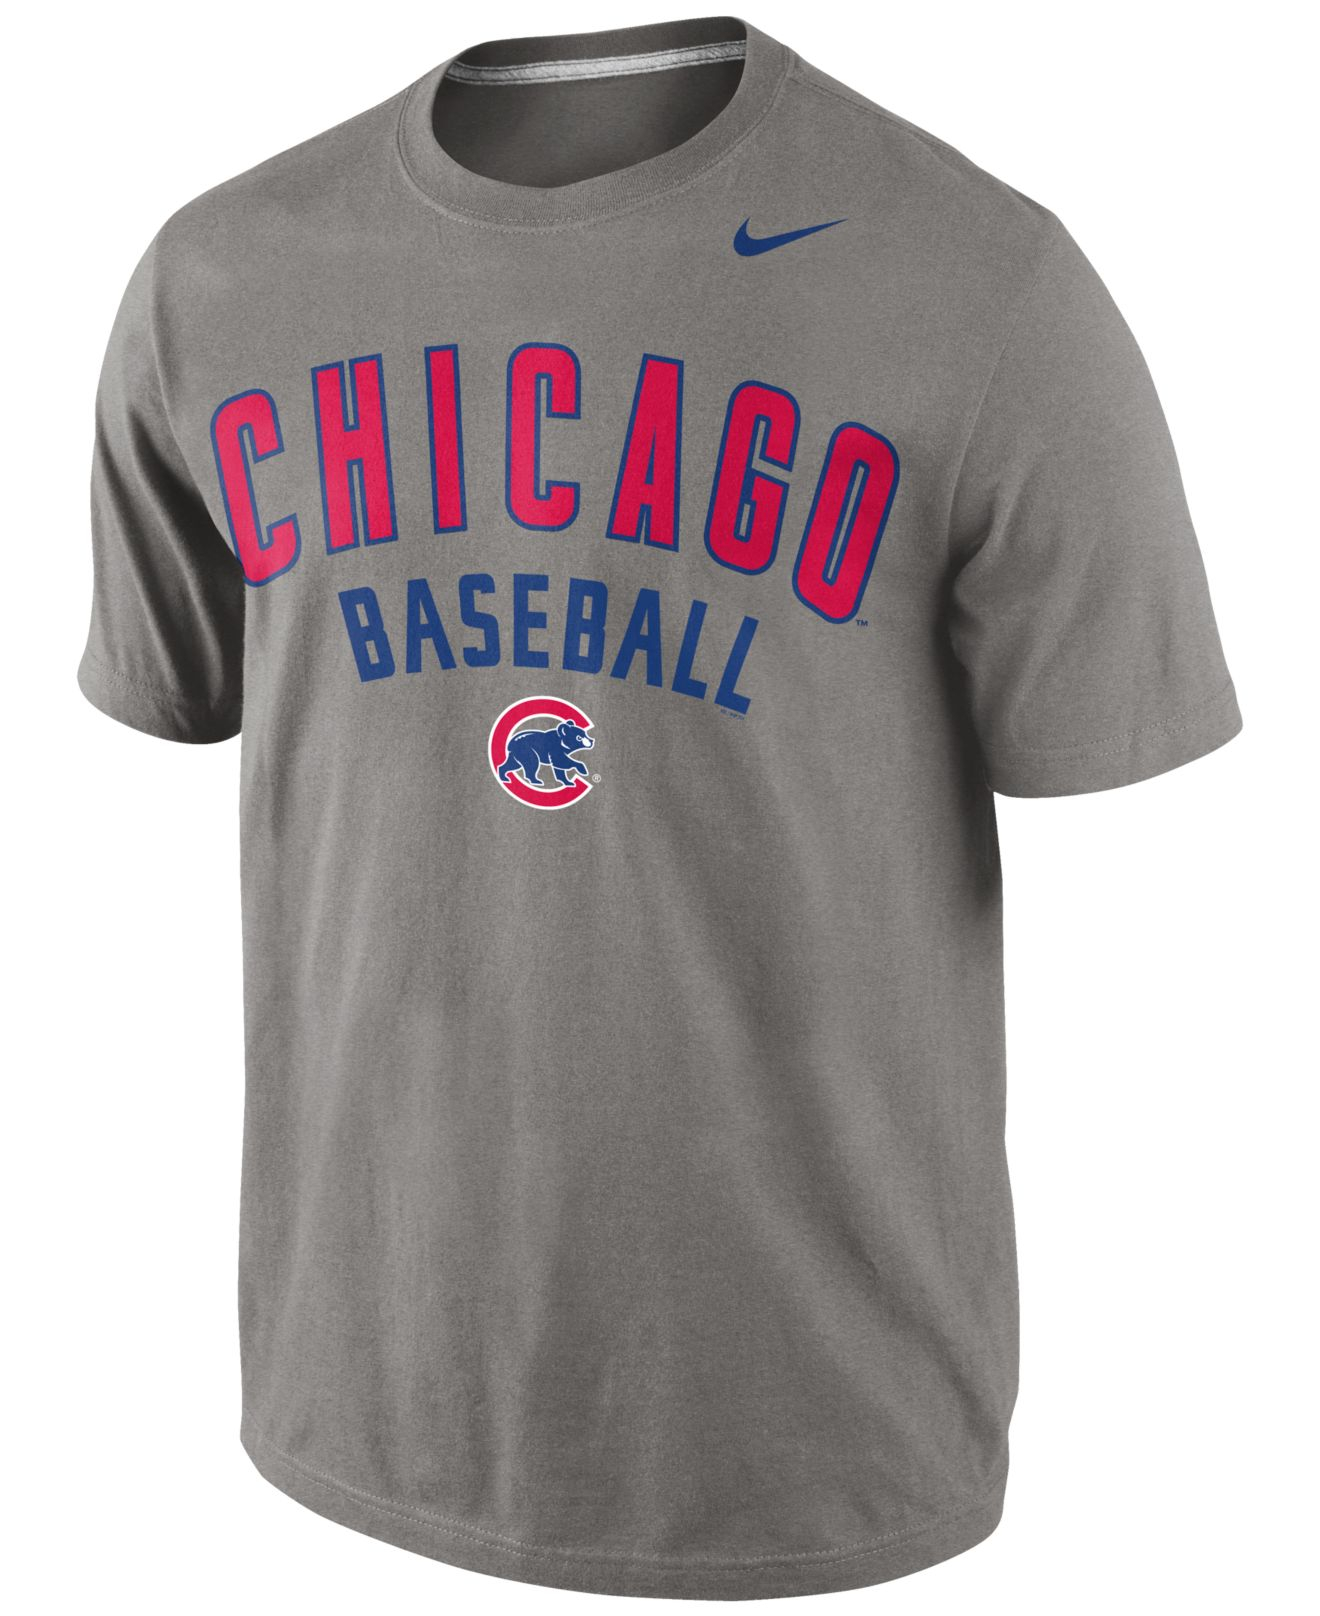 Lyst - Nike Men's Chicago Cubs Away Practice T-shirt in Gray for Men